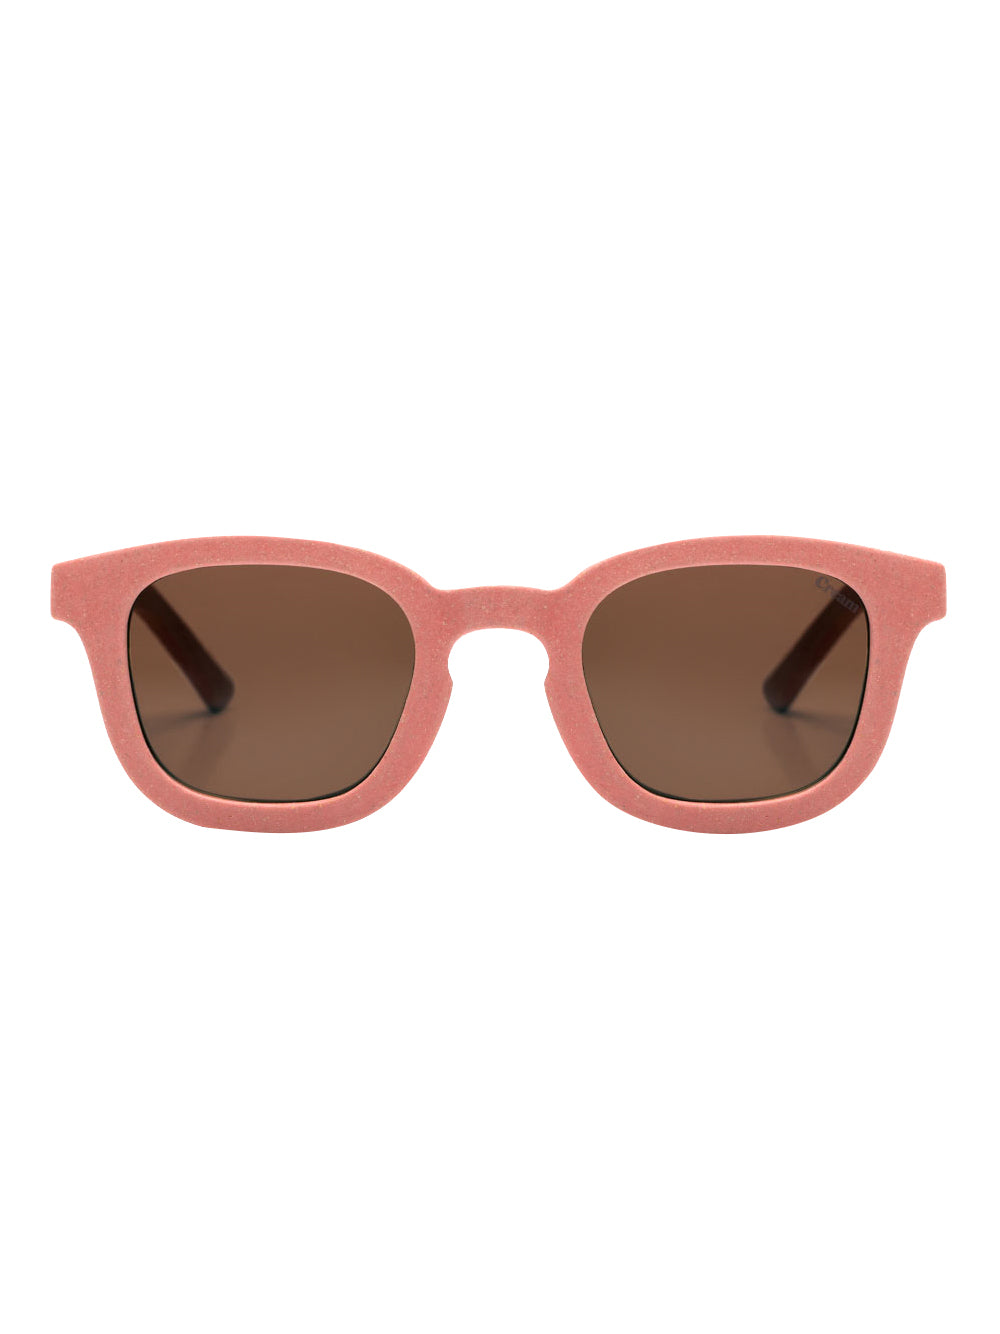 Strawberry Cream Sunglasses